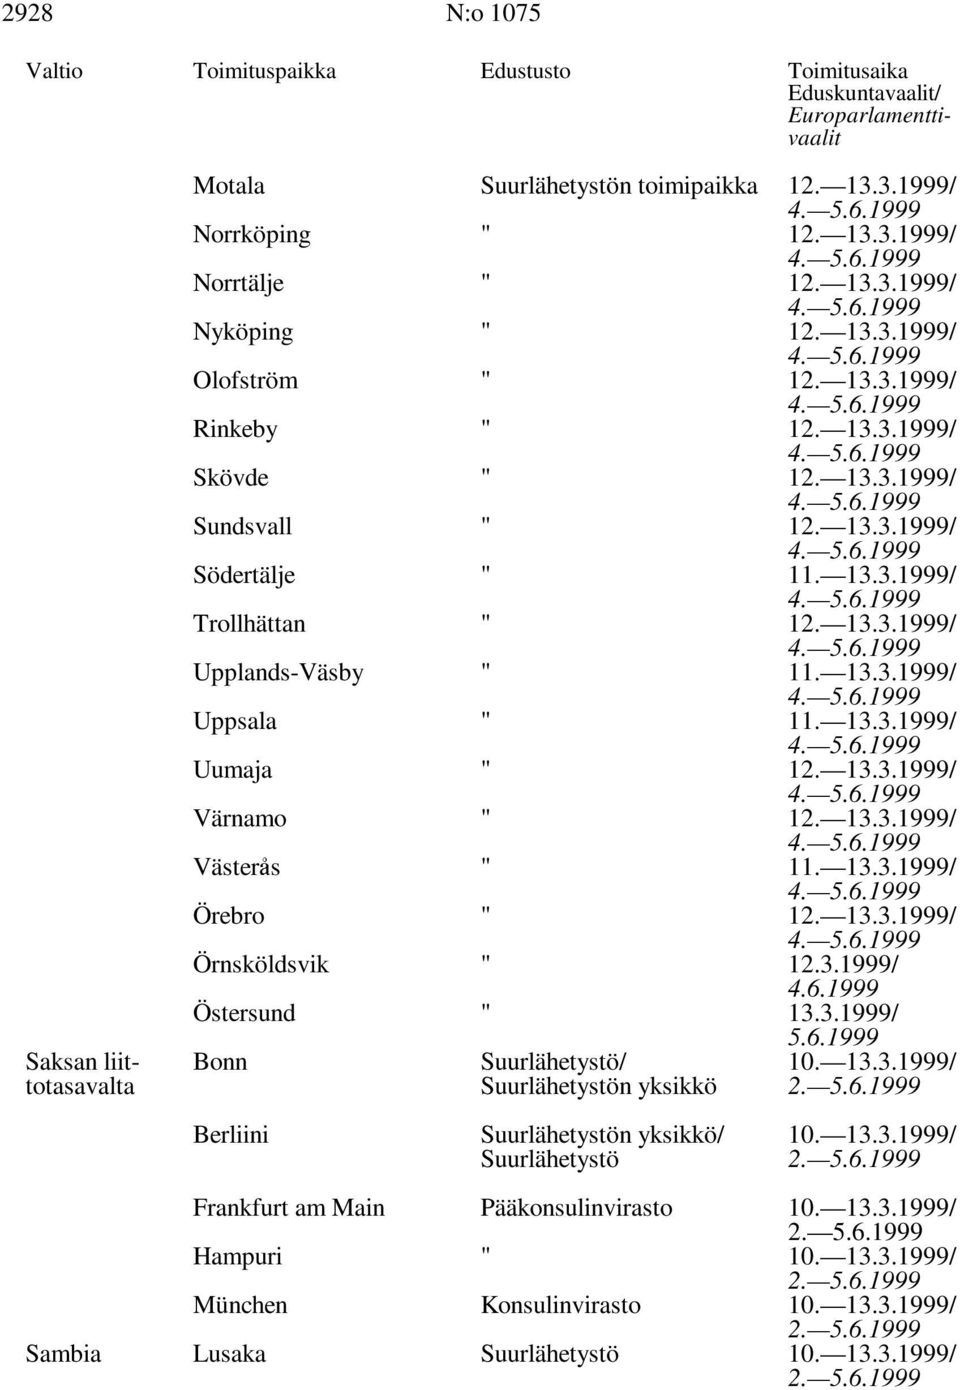 13.3.1999/ Uumaja " 12. 13.3.1999/ Värnamo " 12. 13.3.1999/ Väster's " 11. 13.3.1999/ Örebro " 12. 13.3.1999/ Örnsköldsvik " 12.3.1999/ 4.6.1999 Östersund " 13.3.1999/ Saksan liit- Bonn Suurlähetystö/ 10.